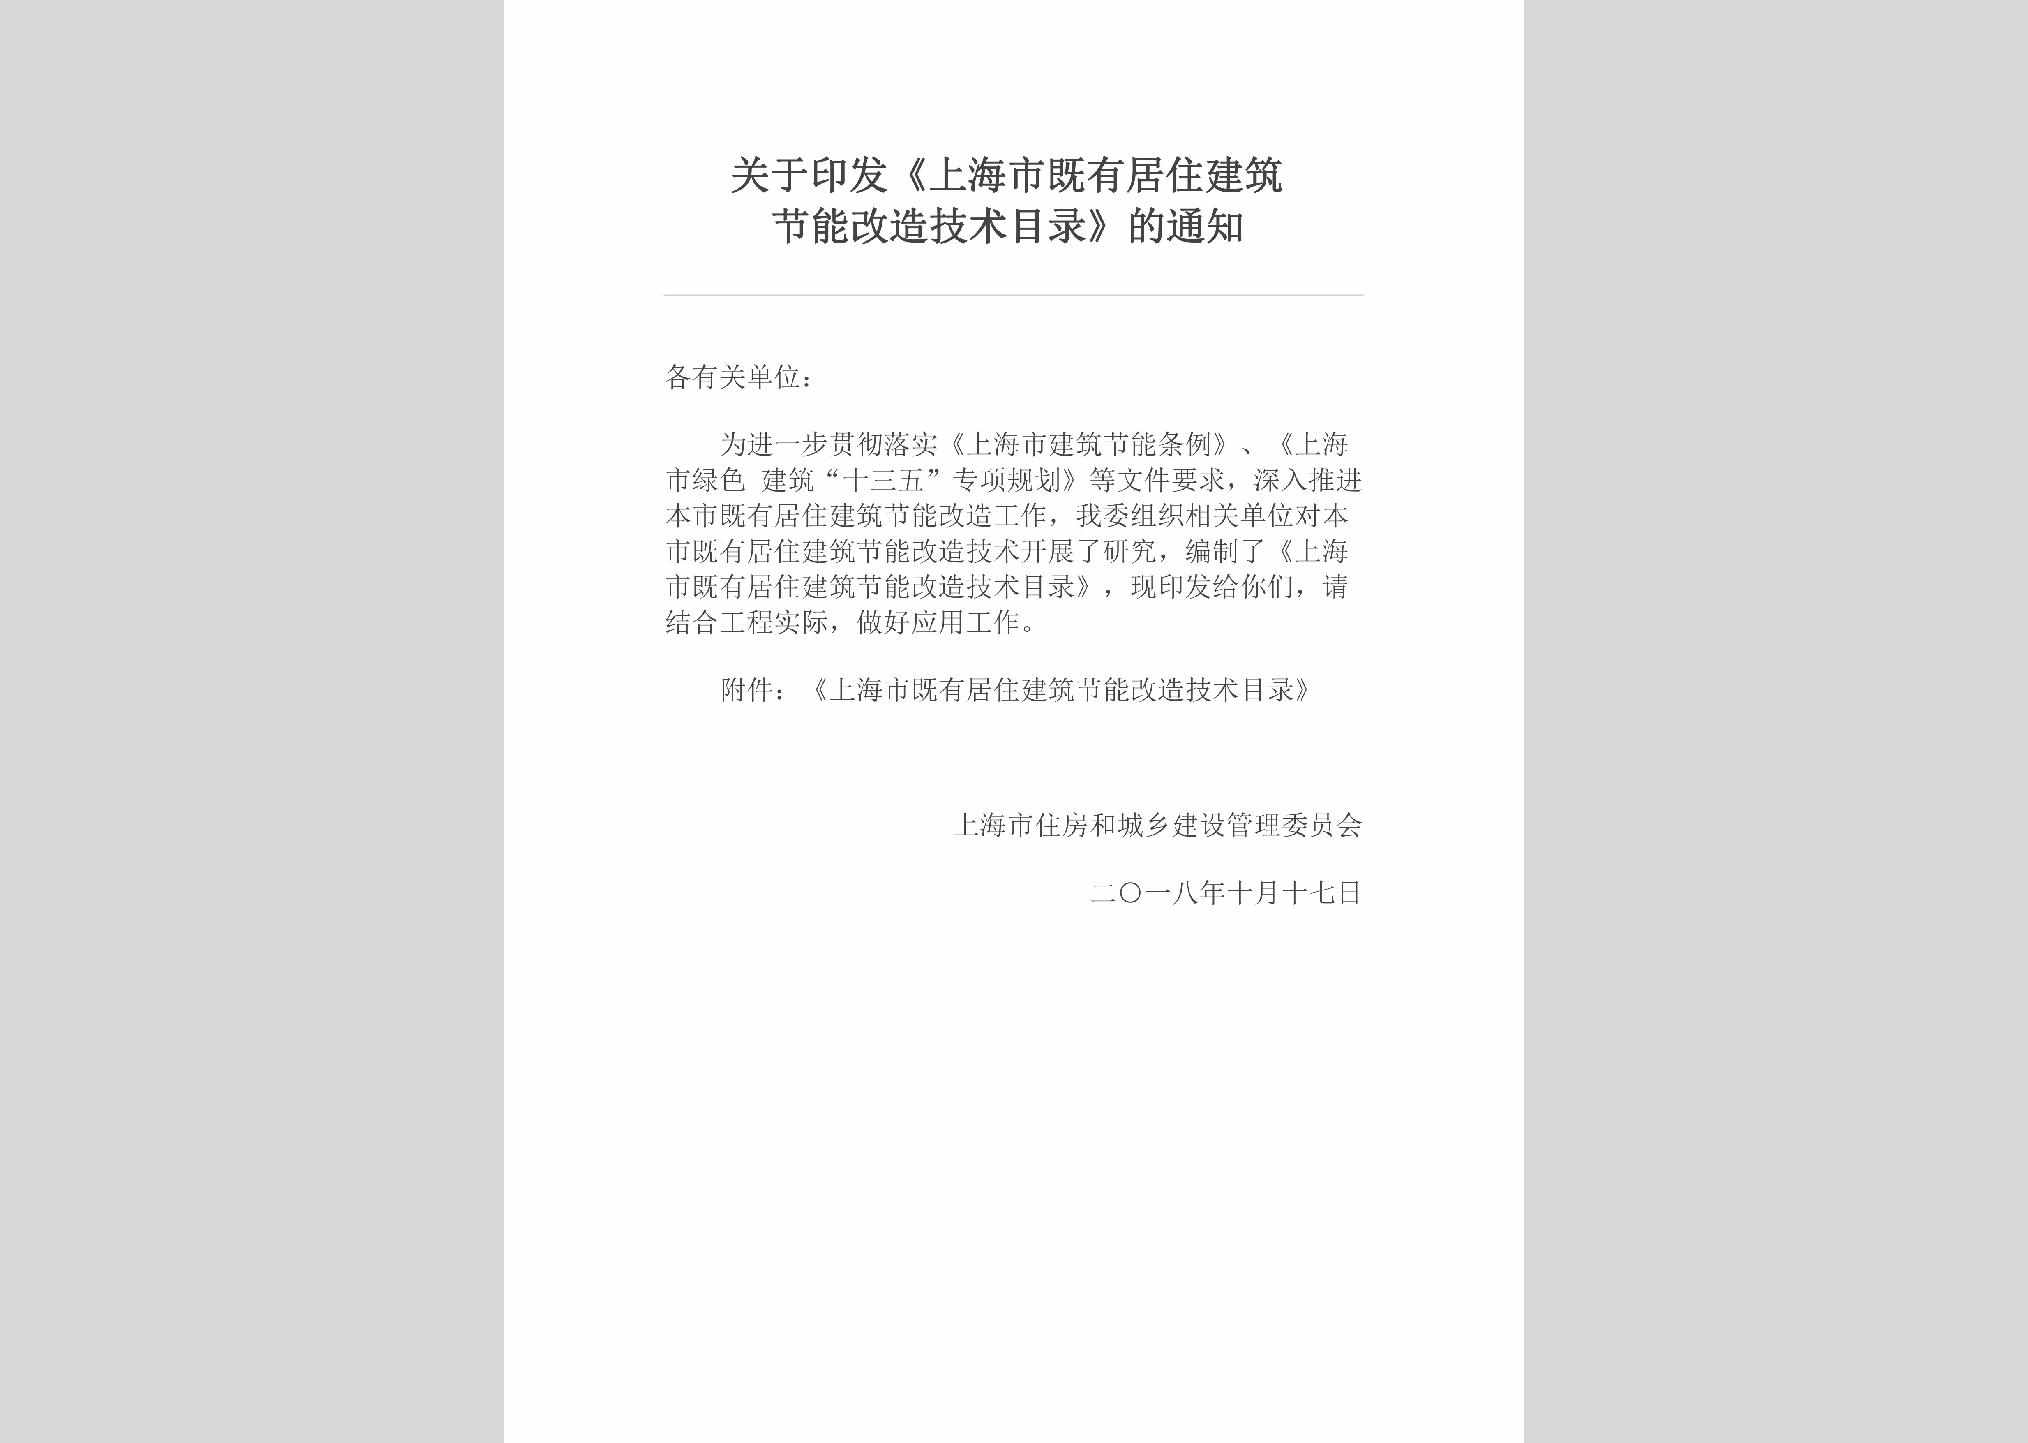 SH-JZJZJGZJ-2018：关于印发《上海市既有居住建筑节能改造技术目录》的通知